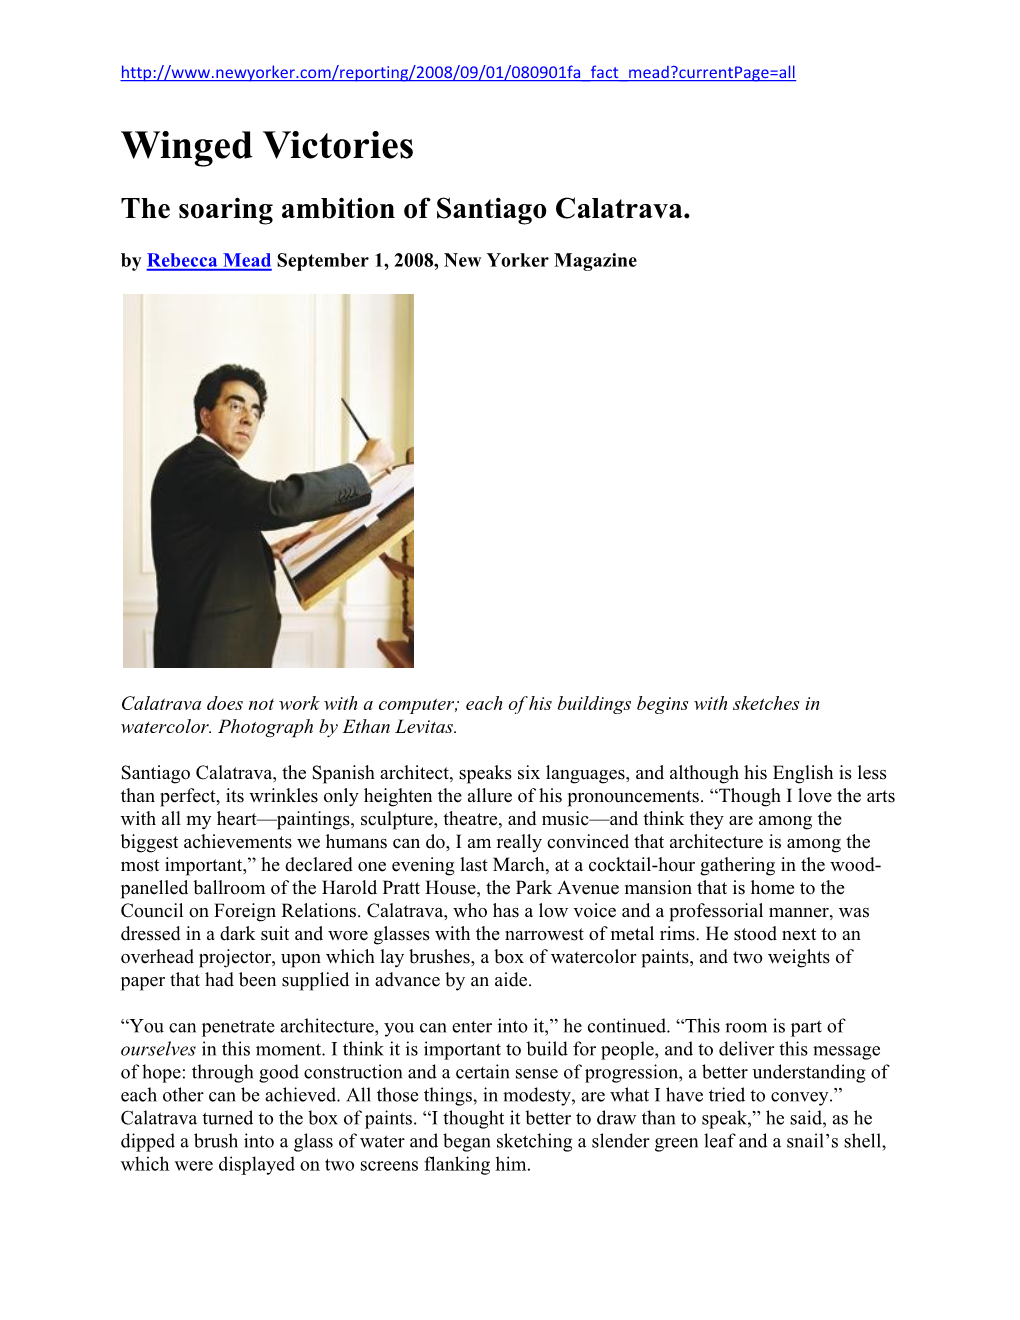 Winged Victories of Santiago Calatrava Article 2008